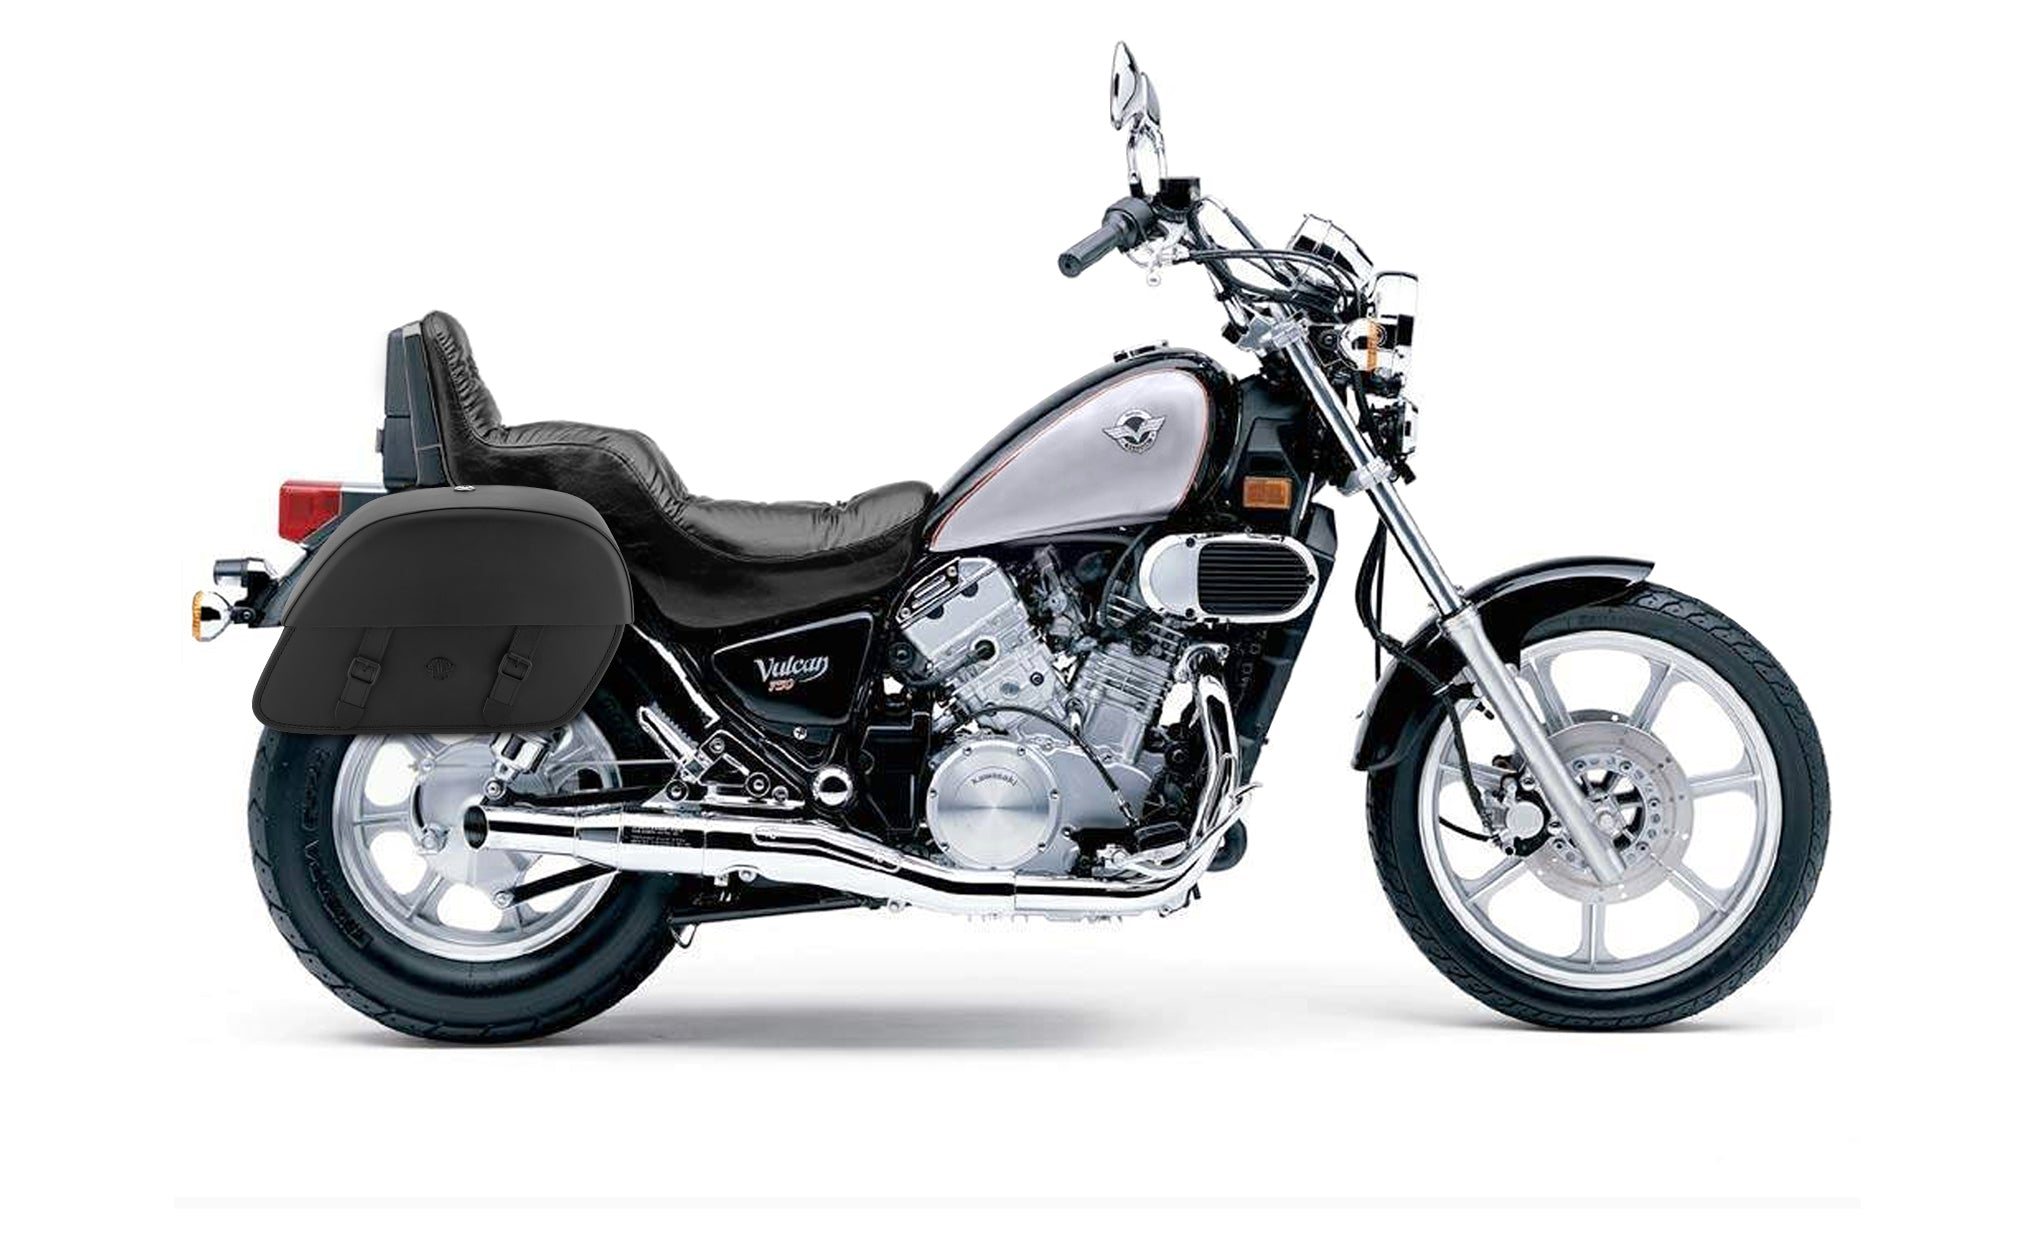 Viking Baelor Large Kawasaki Vulcan 750 Vn750 Leather Motorcycle Saddlebags on Bike Photo @expand